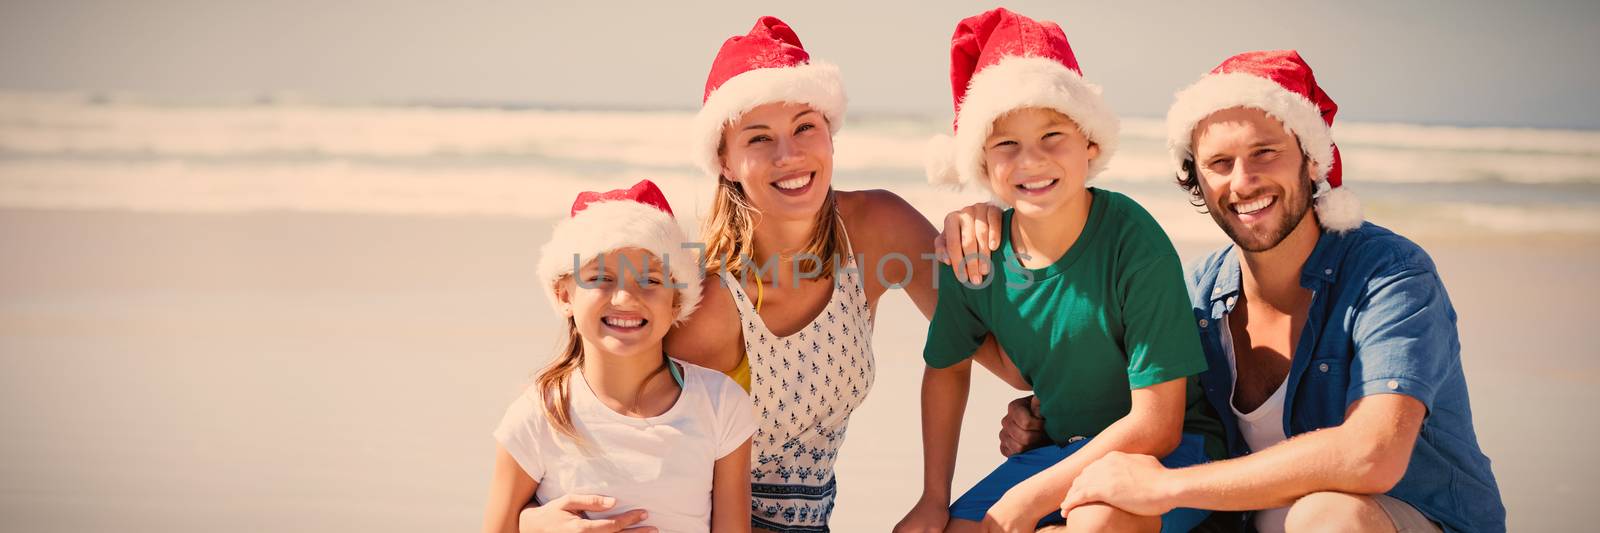 Portrait of smiling family wearing Santa hat at beach by Wavebreakmedia